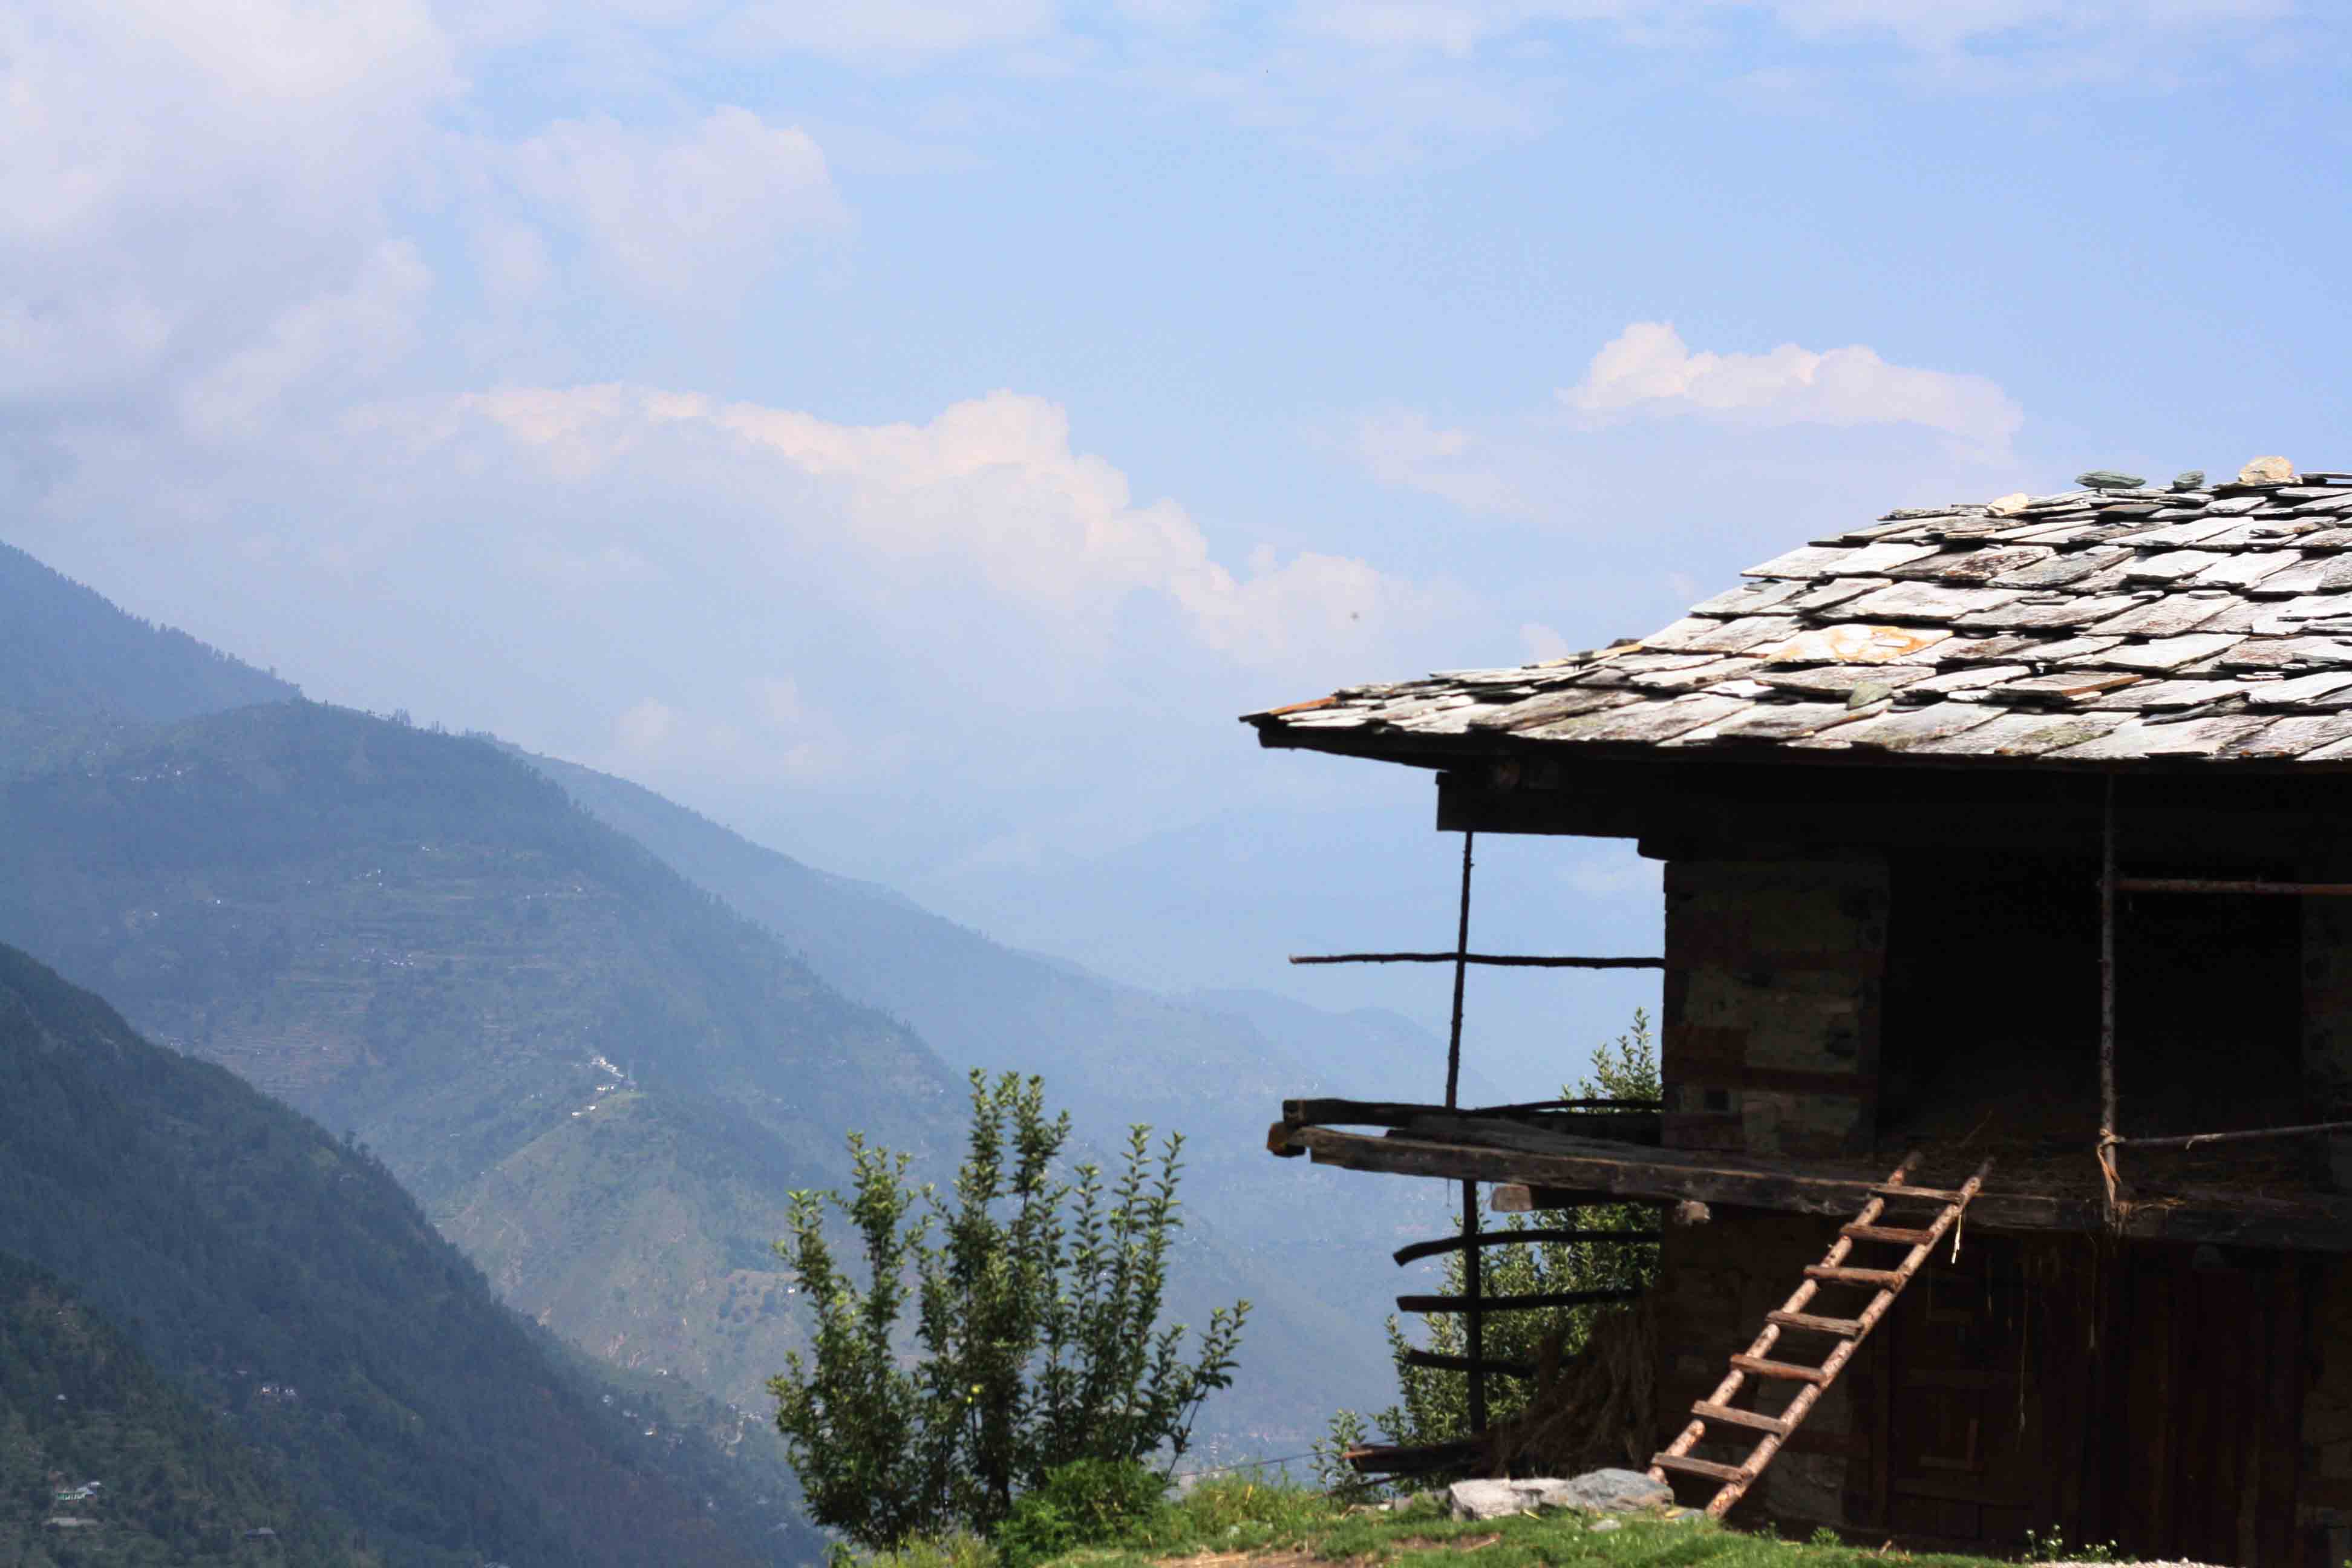 City Travel - Pekhari Village, Great Himalayan National Park